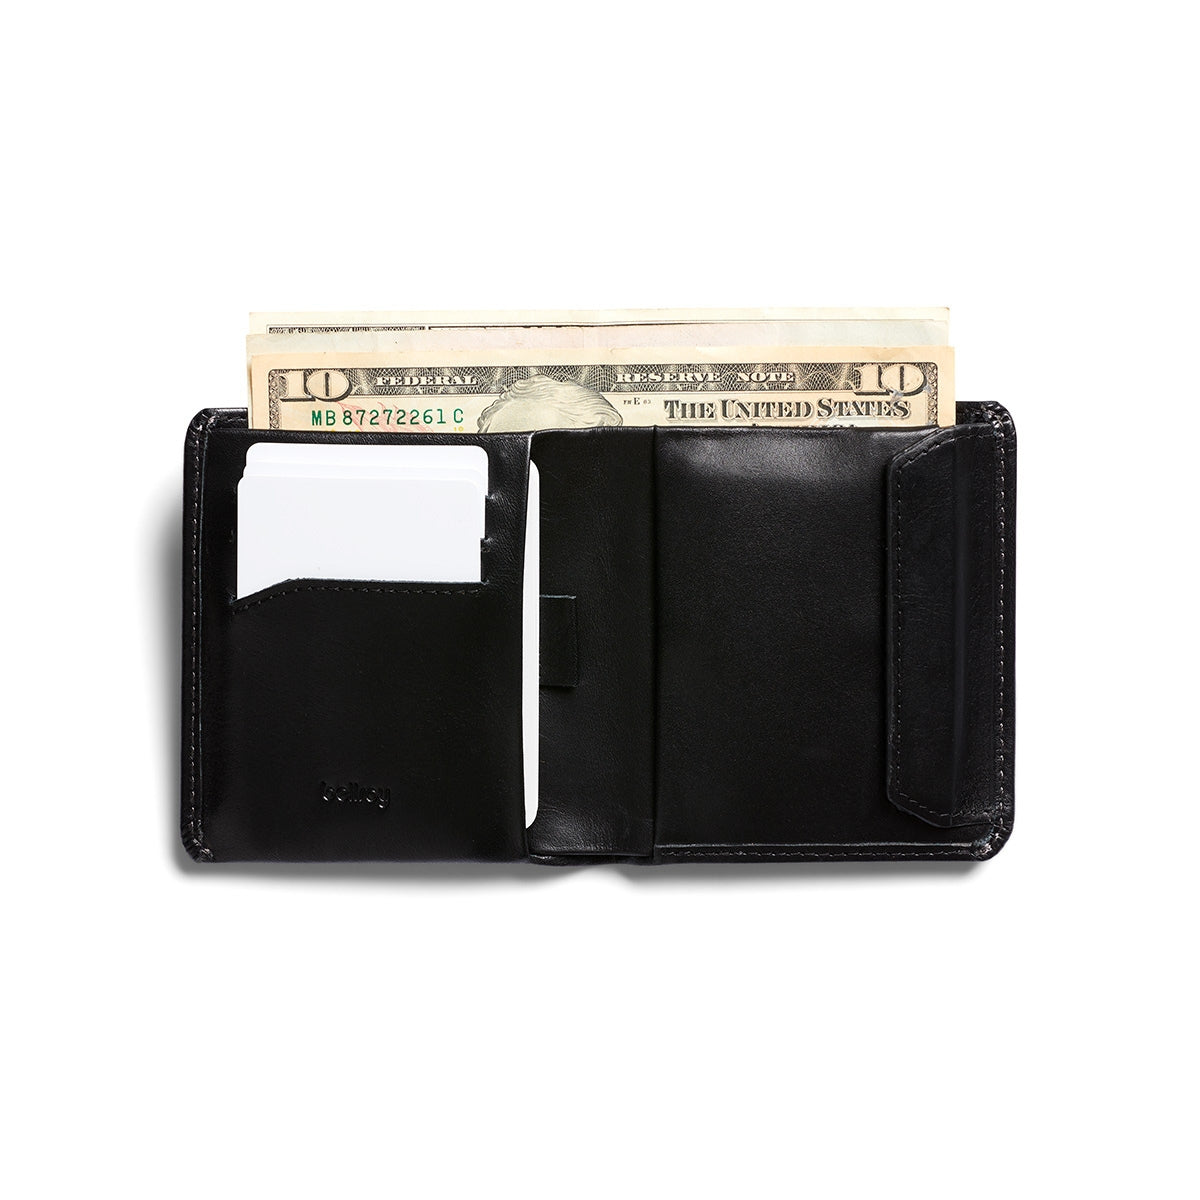 Bellroy Coin Wallet in Black